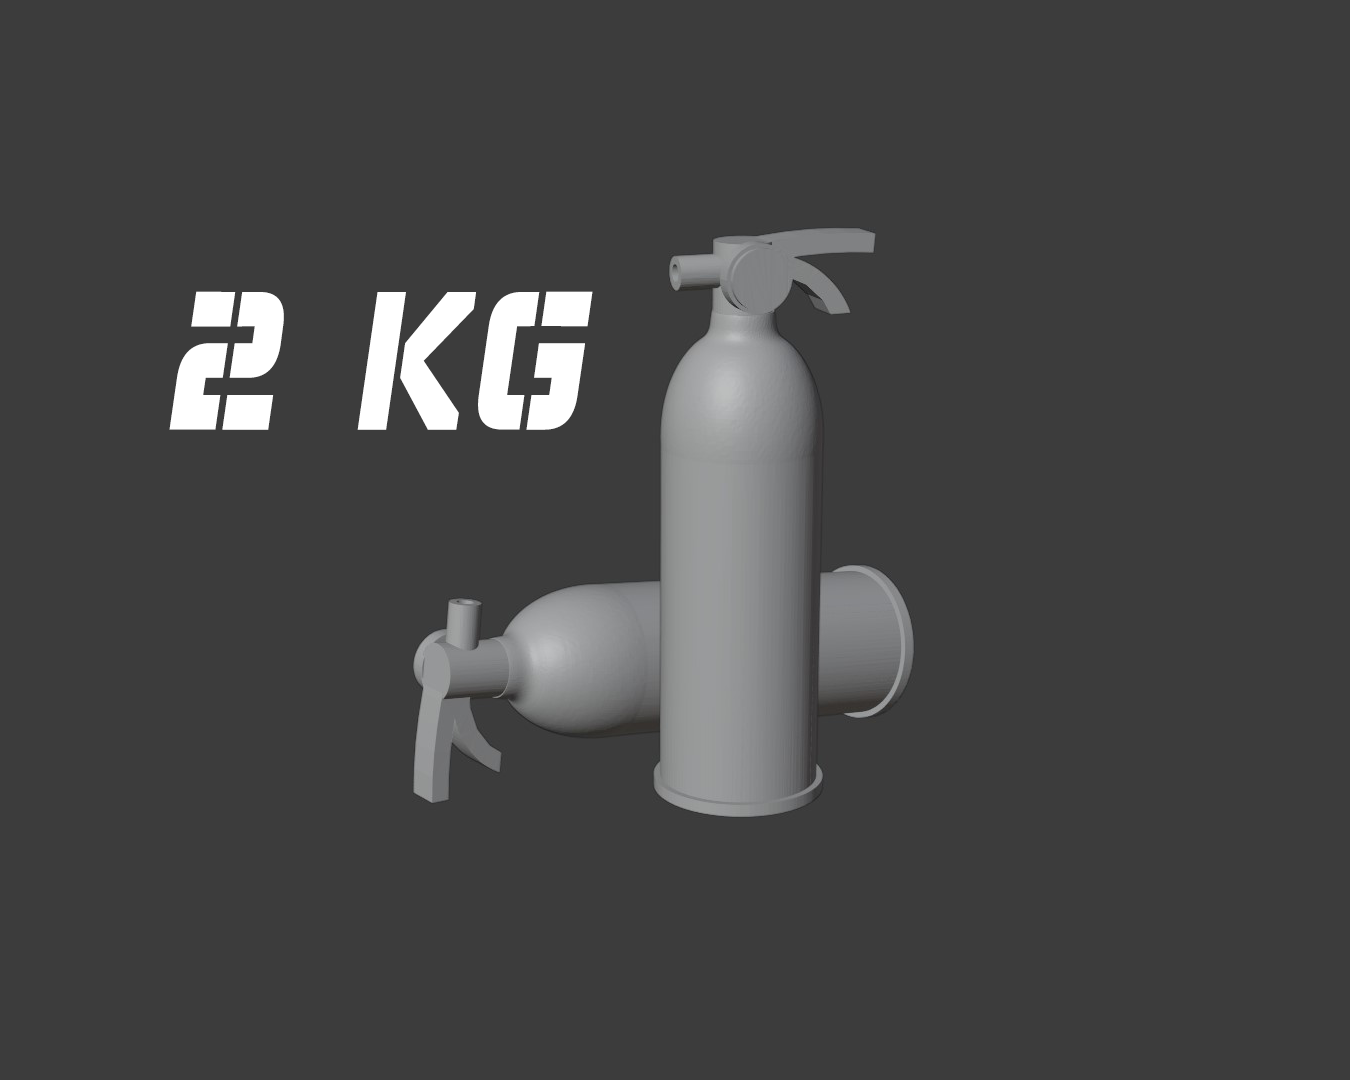 Fire extinguisher 2kg (4pc)